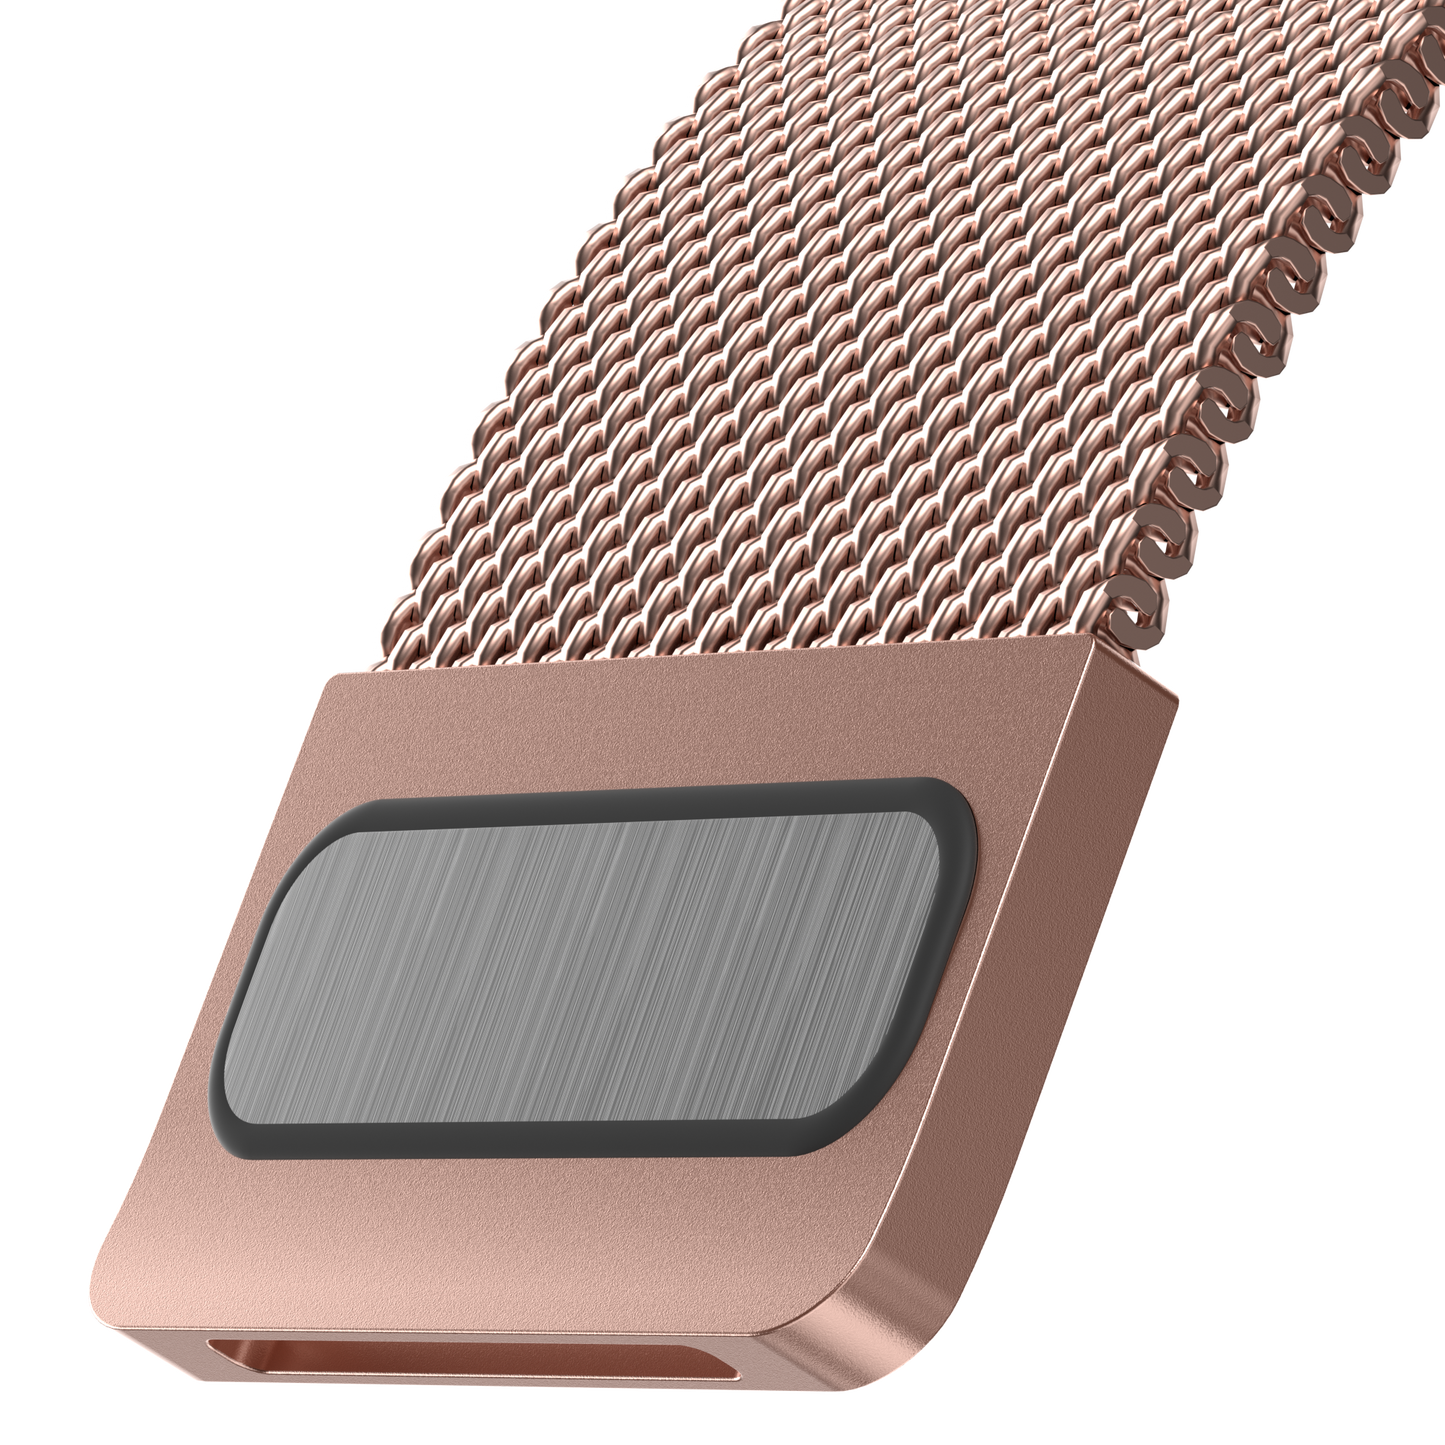 SwitchEasy Mesh Stainless Steel Watch Loop Apple Watch Wrist Band